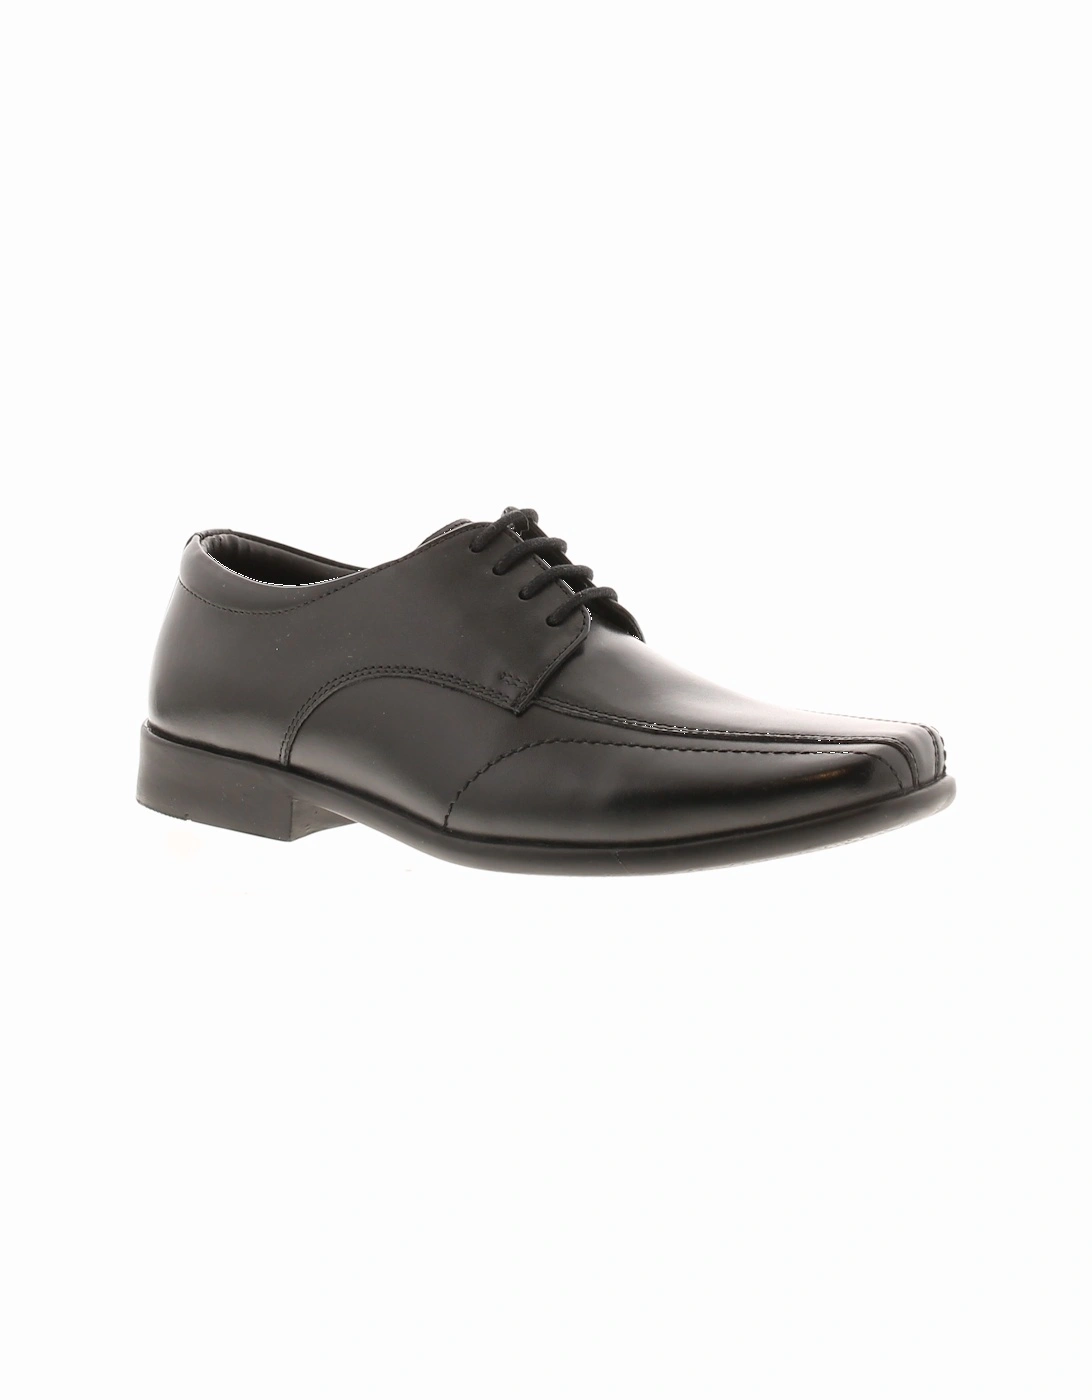 Boys School Shoes Formal Jon Leather black UK Size, 6 of 5